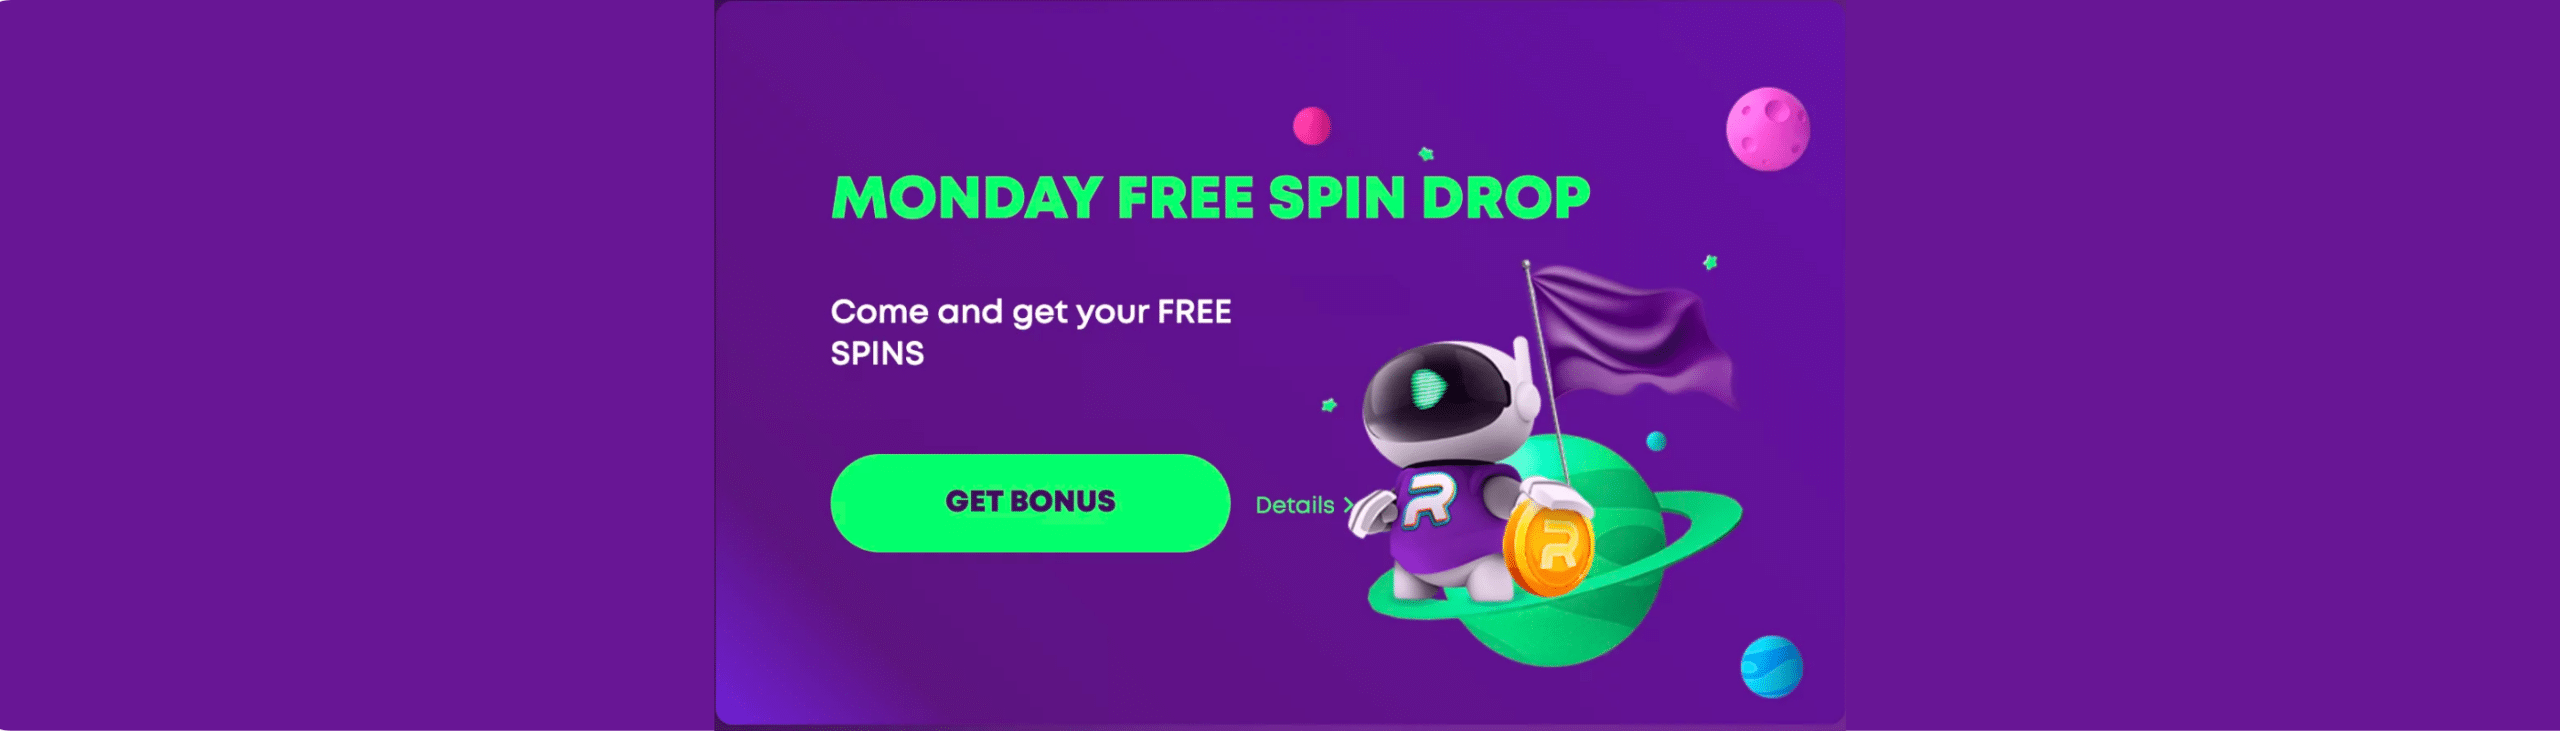 monday free spin drop